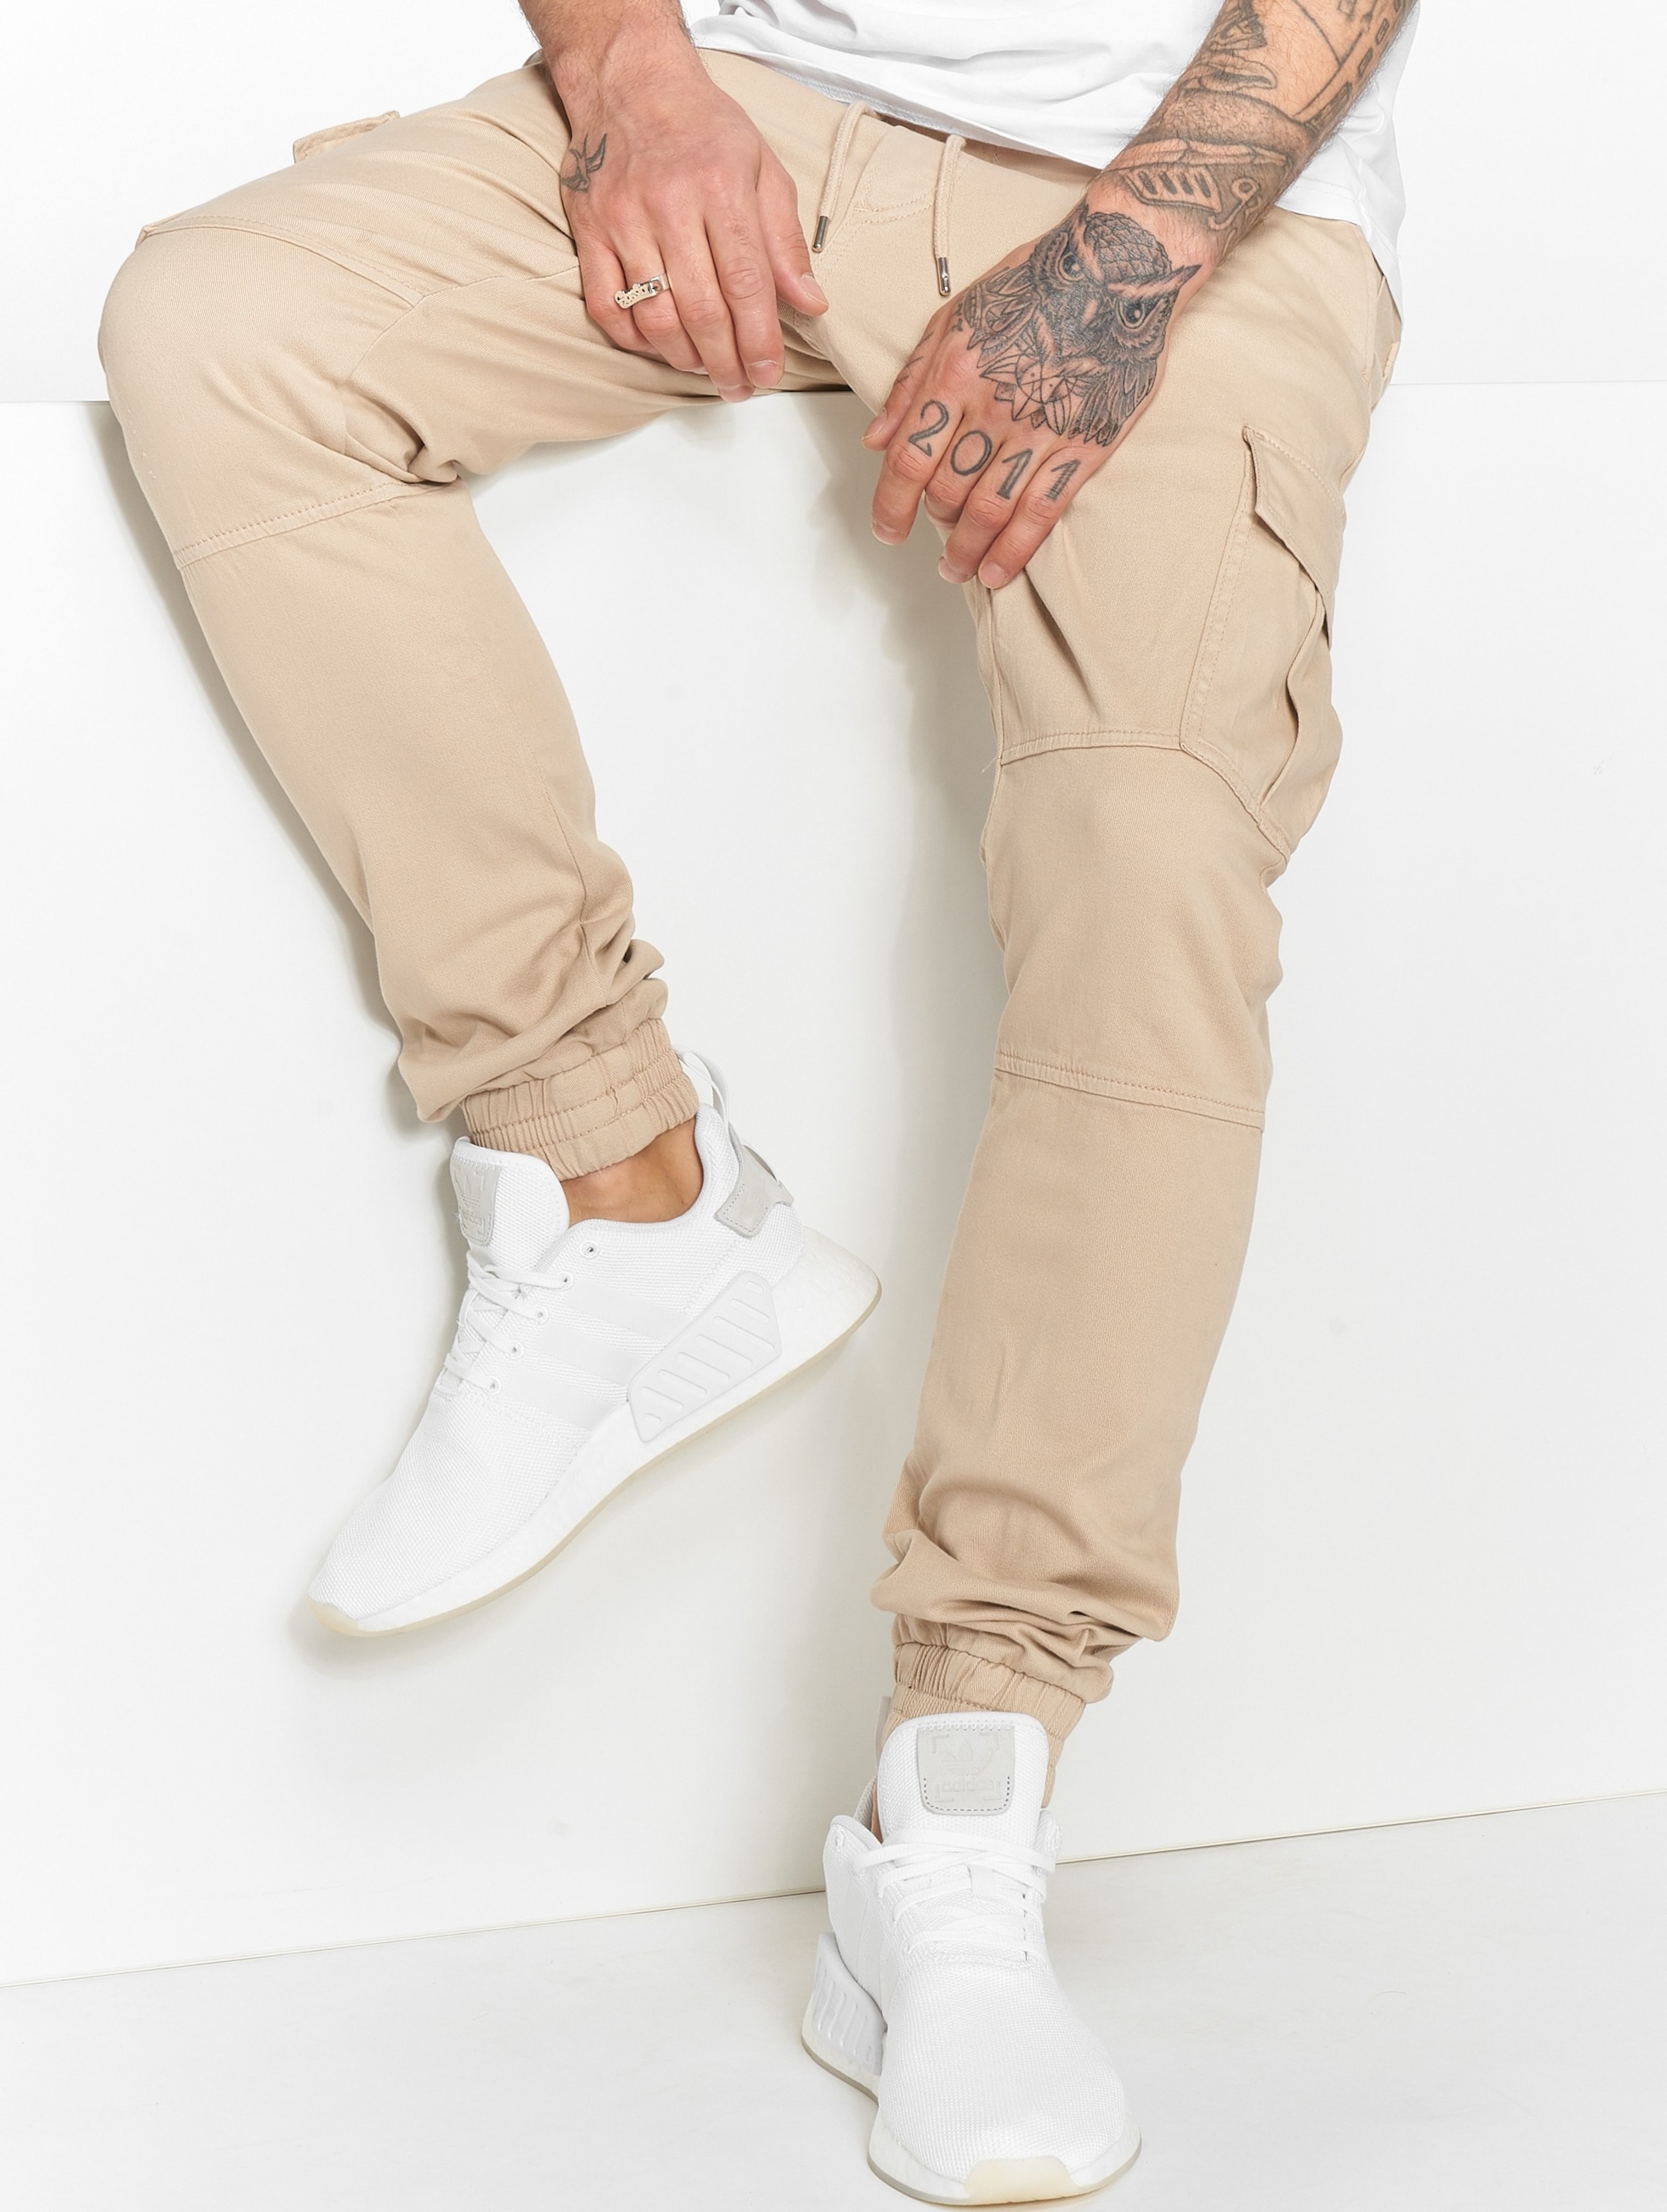 DEF - Makome Antifit Jeans Broek rechte pijpen - Taille, 31 inch - Beige